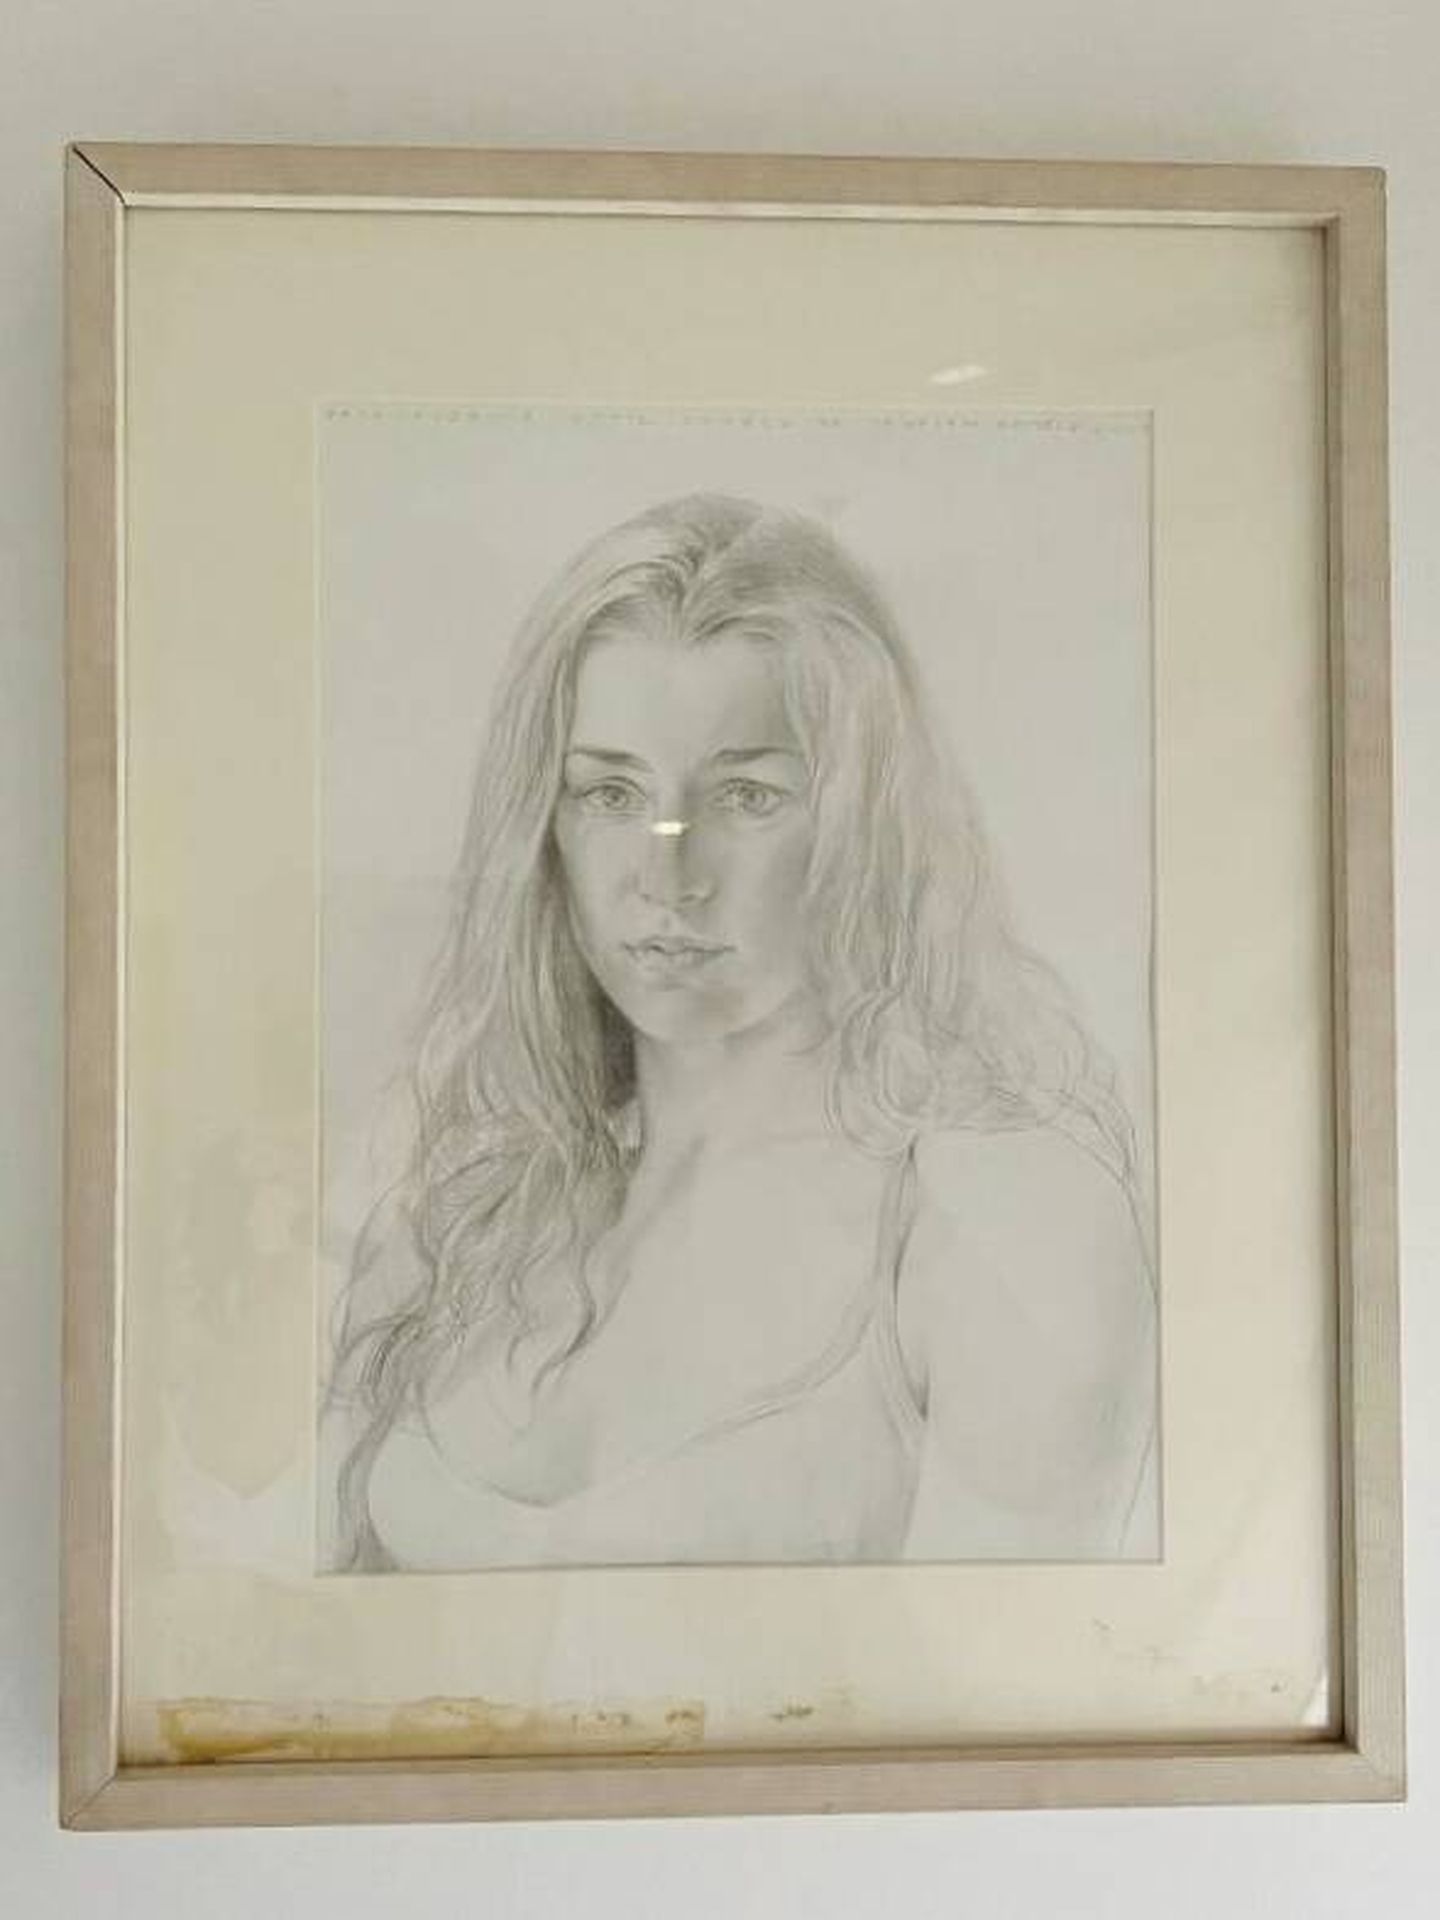 Retrato de Eugenia Osborne realizado por tu tío, el fantástico artista Christian Domecq. (Cortesía)